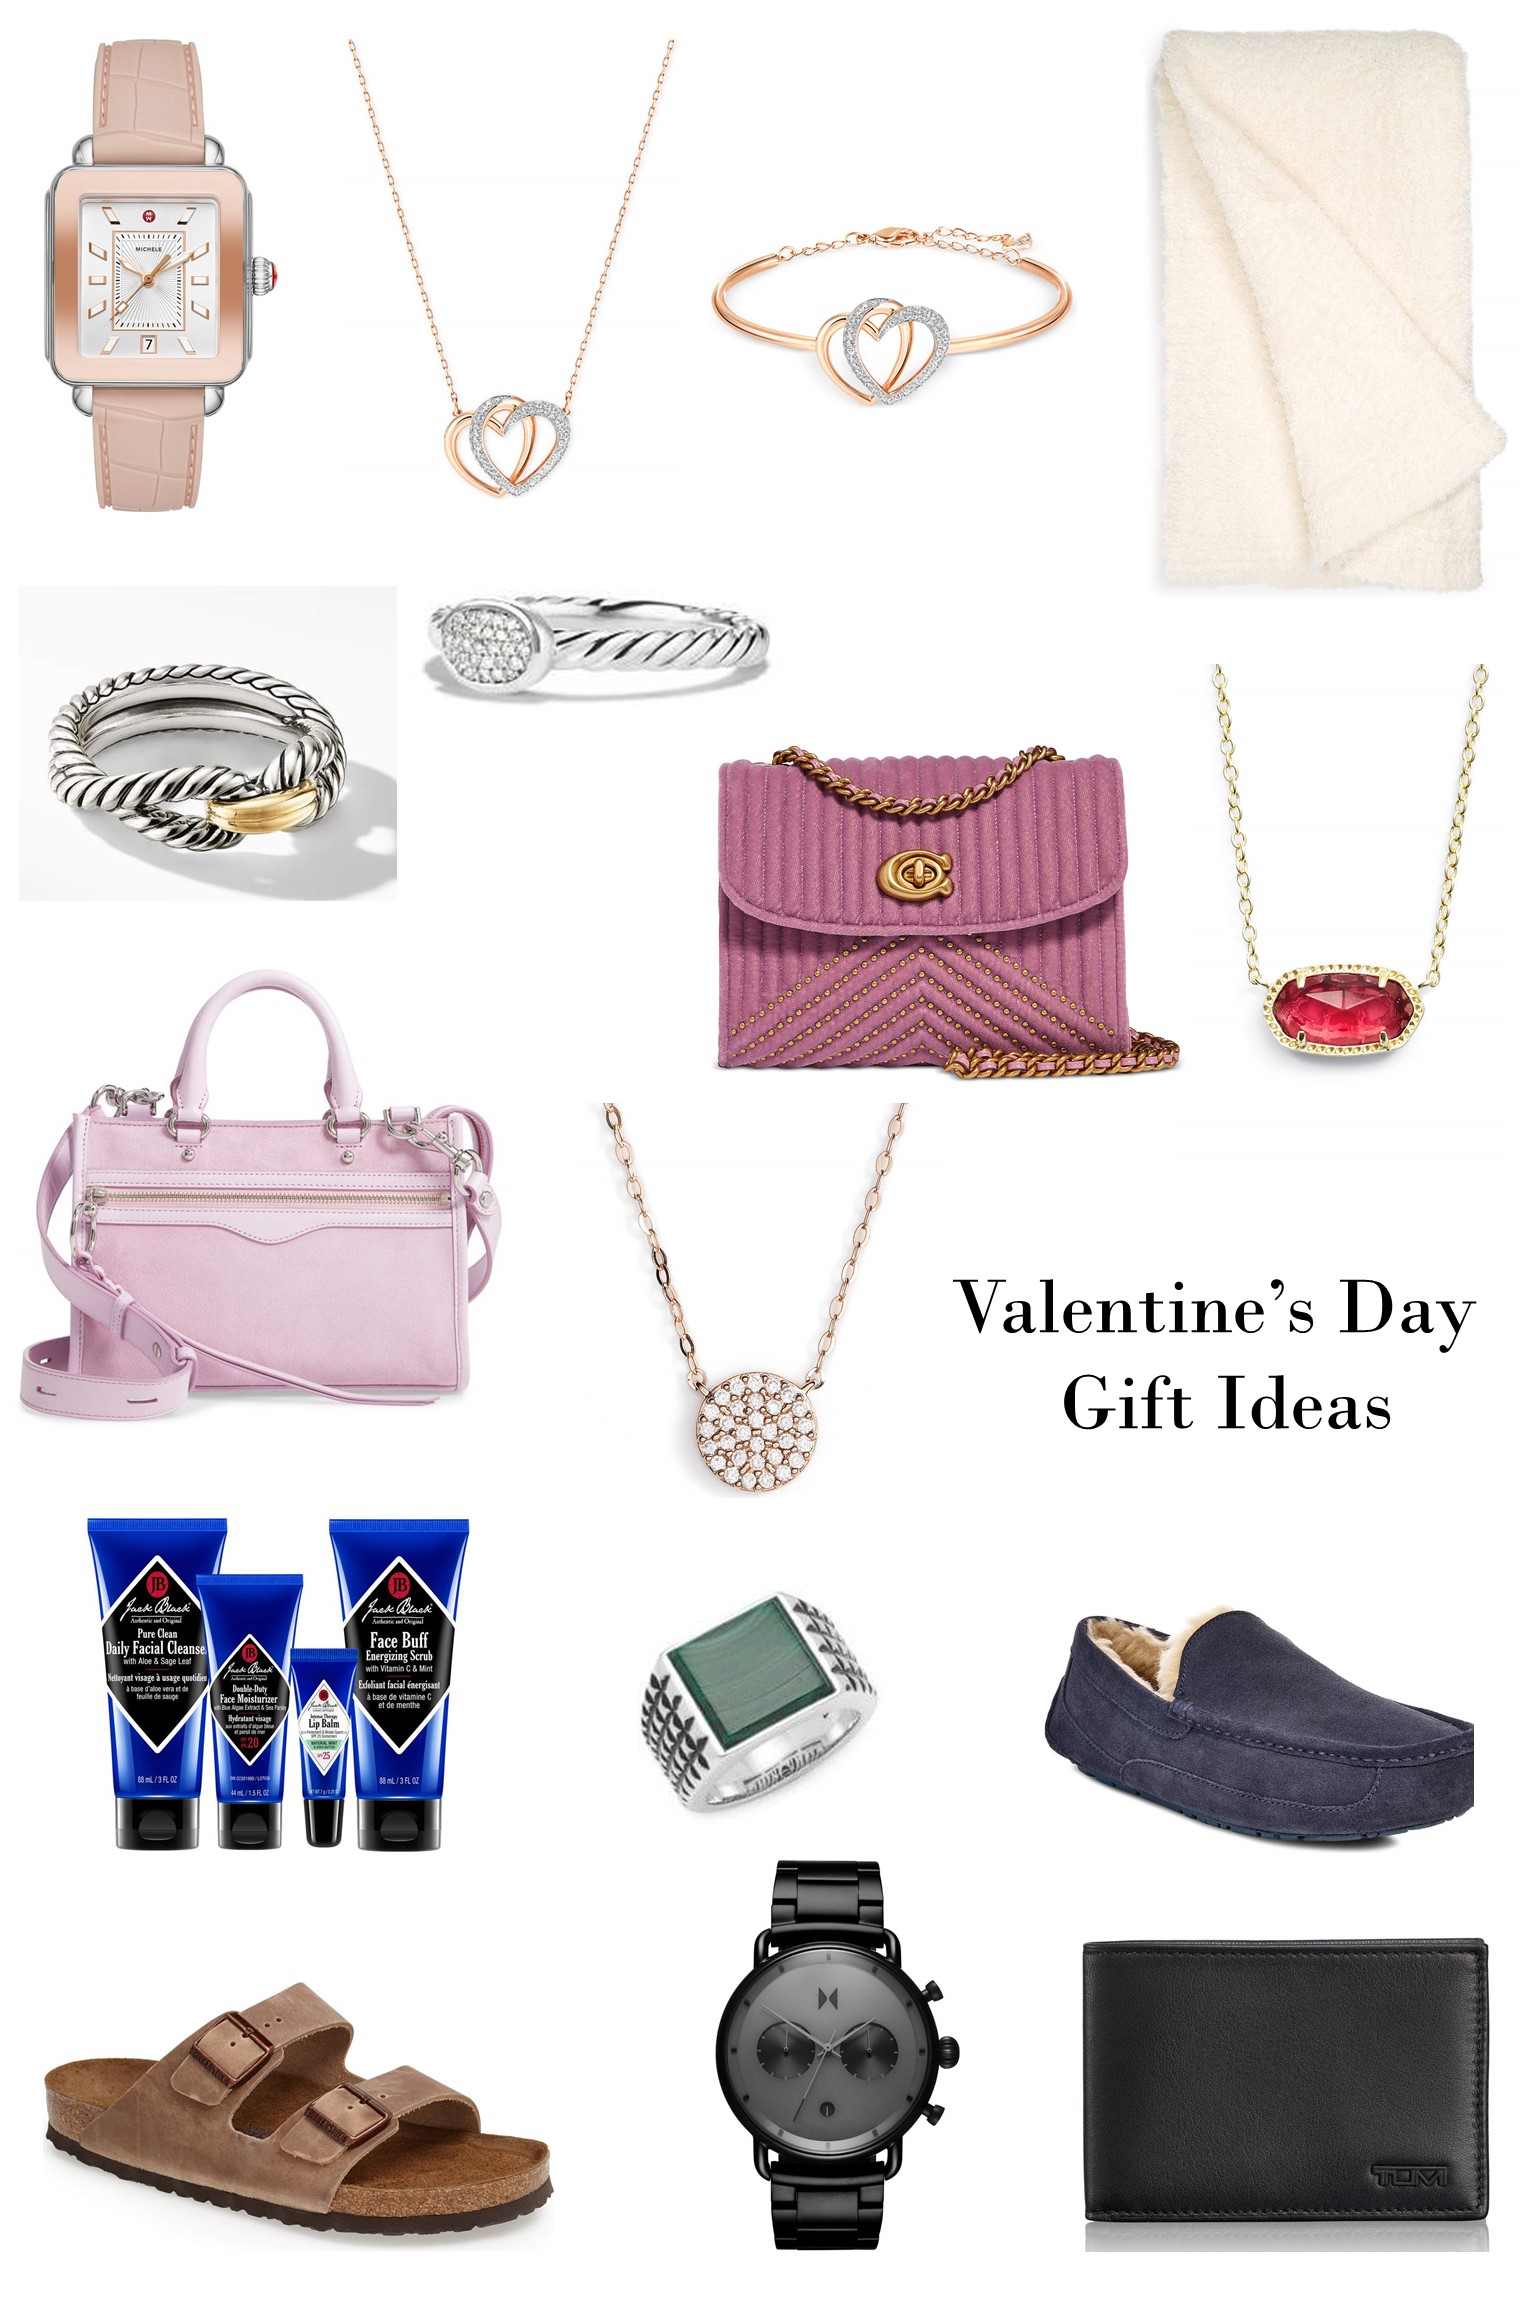 Valentine's Day Gift Ideas for Women & Men